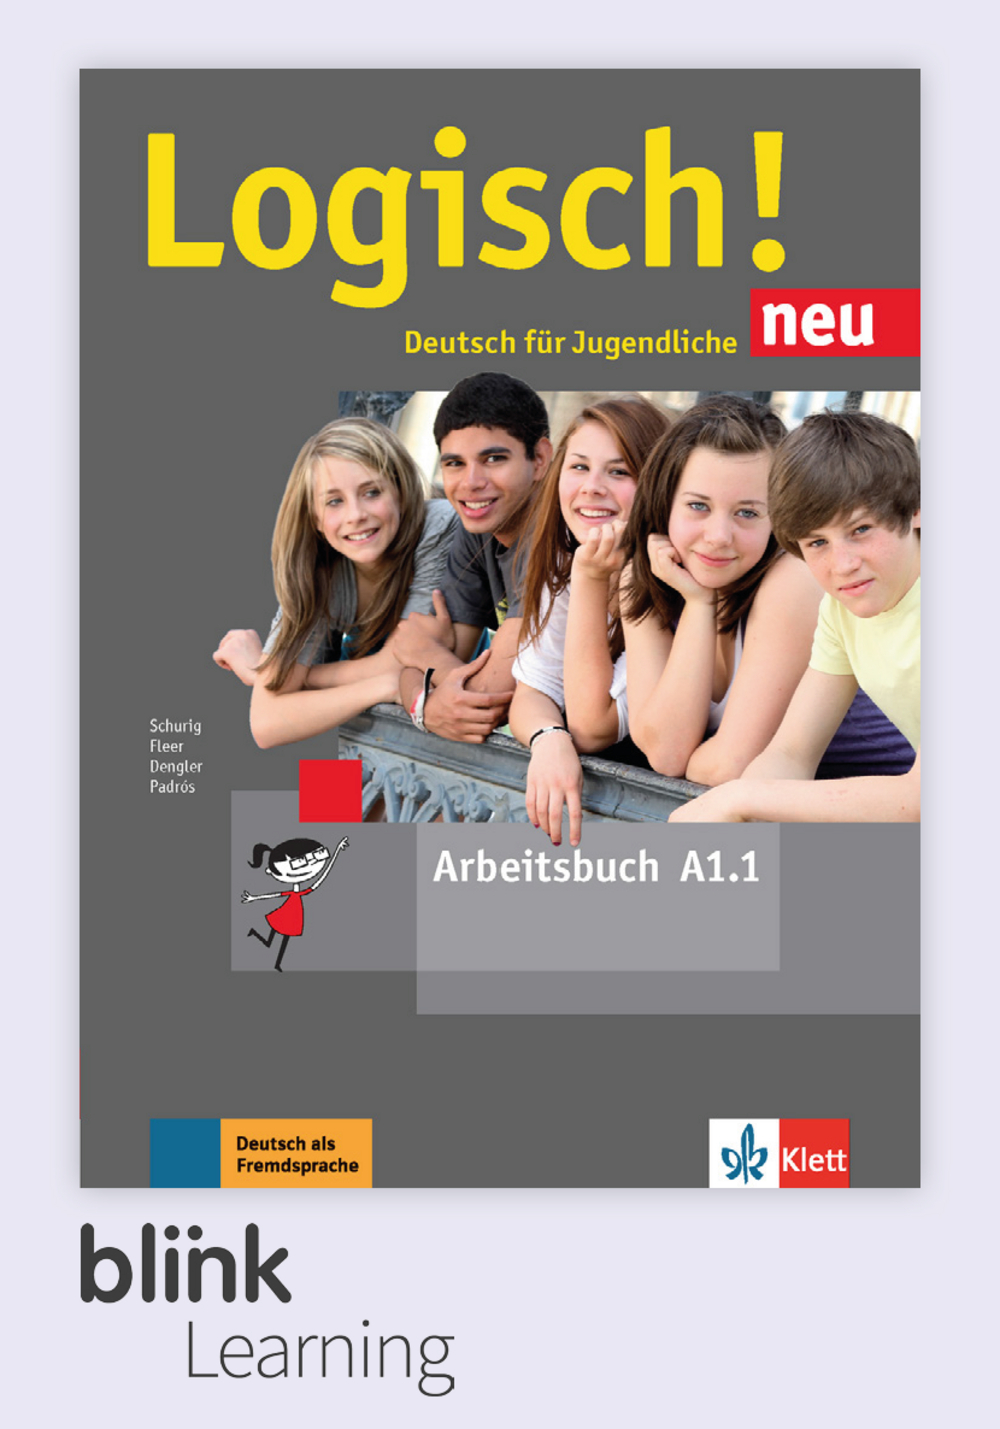 Logisch! NEU A1.1 Digital Arbeitsbuch für Unterrichtende / Цифровая рабочая тетрадь для учителя